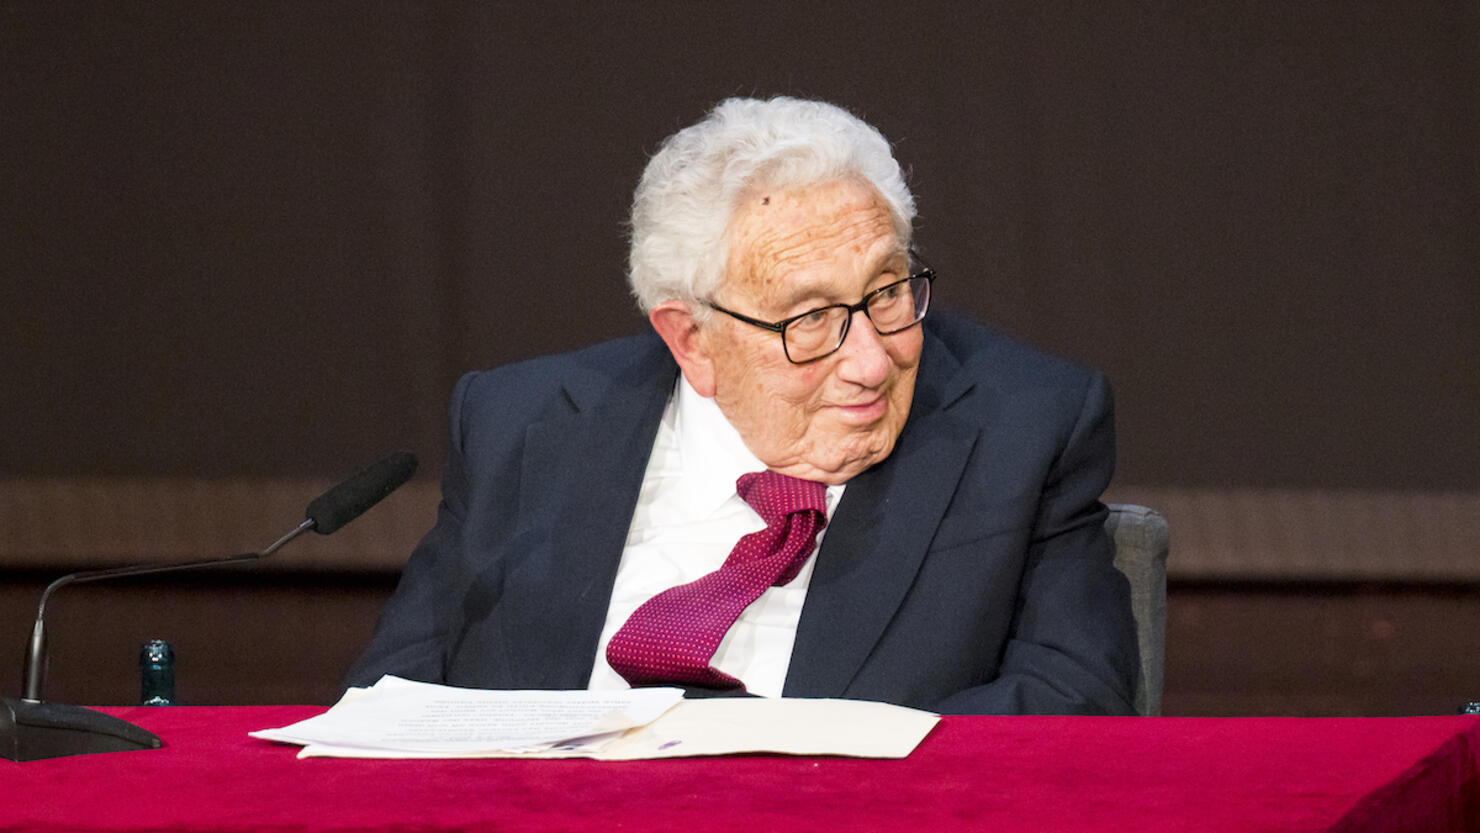 Celebration of the 100th birthday of former US Secretary of State Kissinger